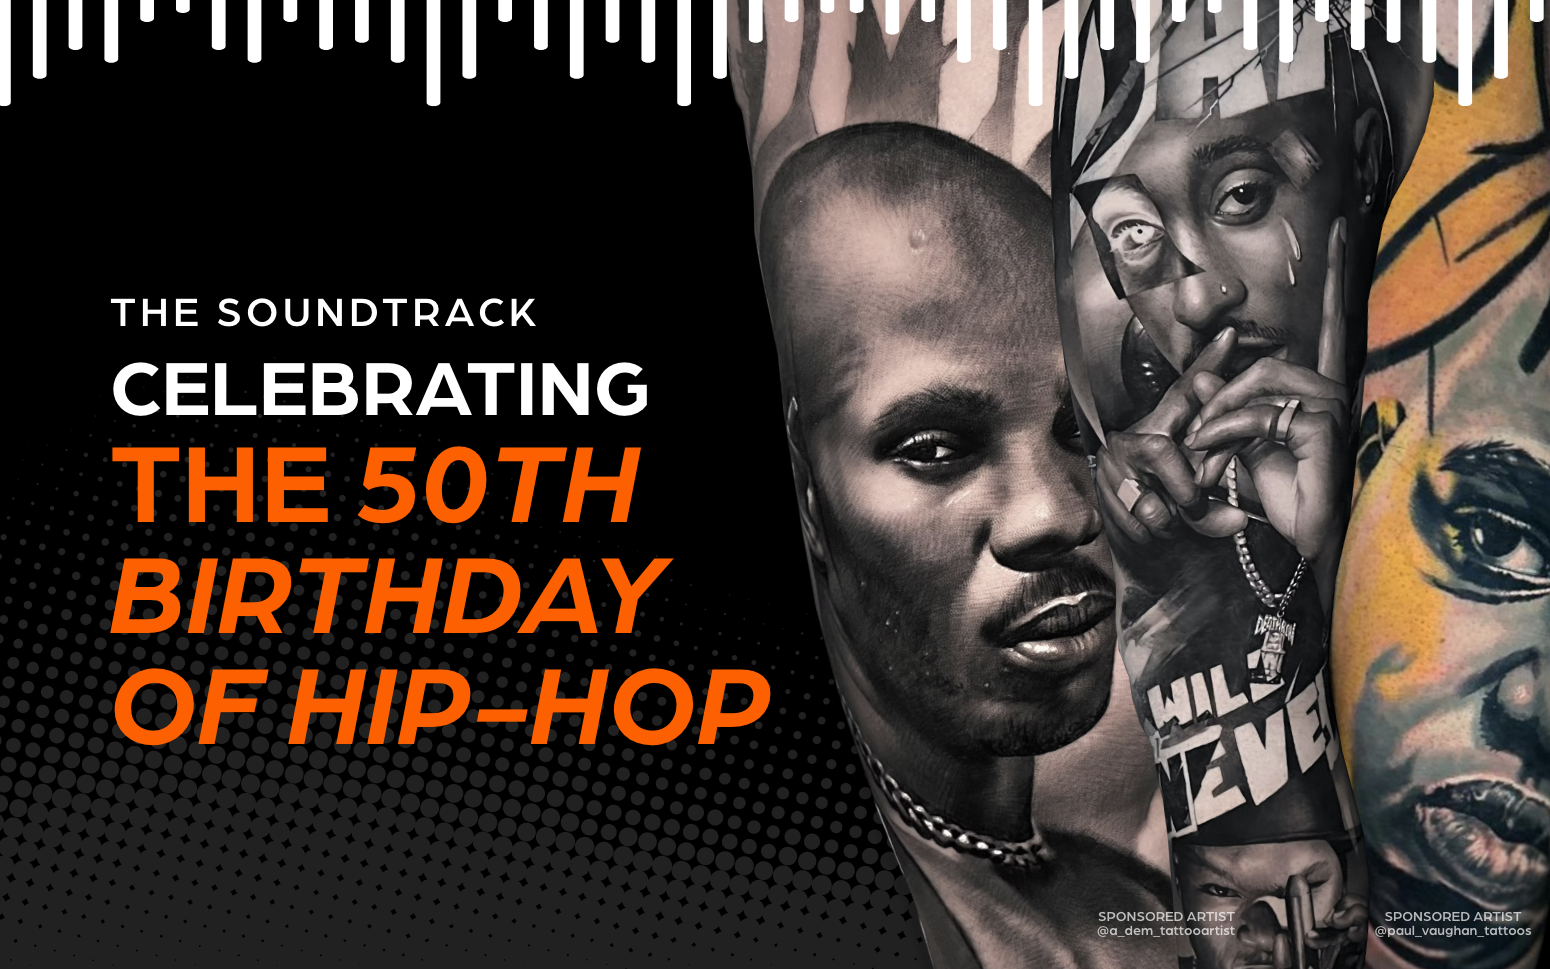 The Soundtrack - Celebrating the Contribution of Hip-Hop